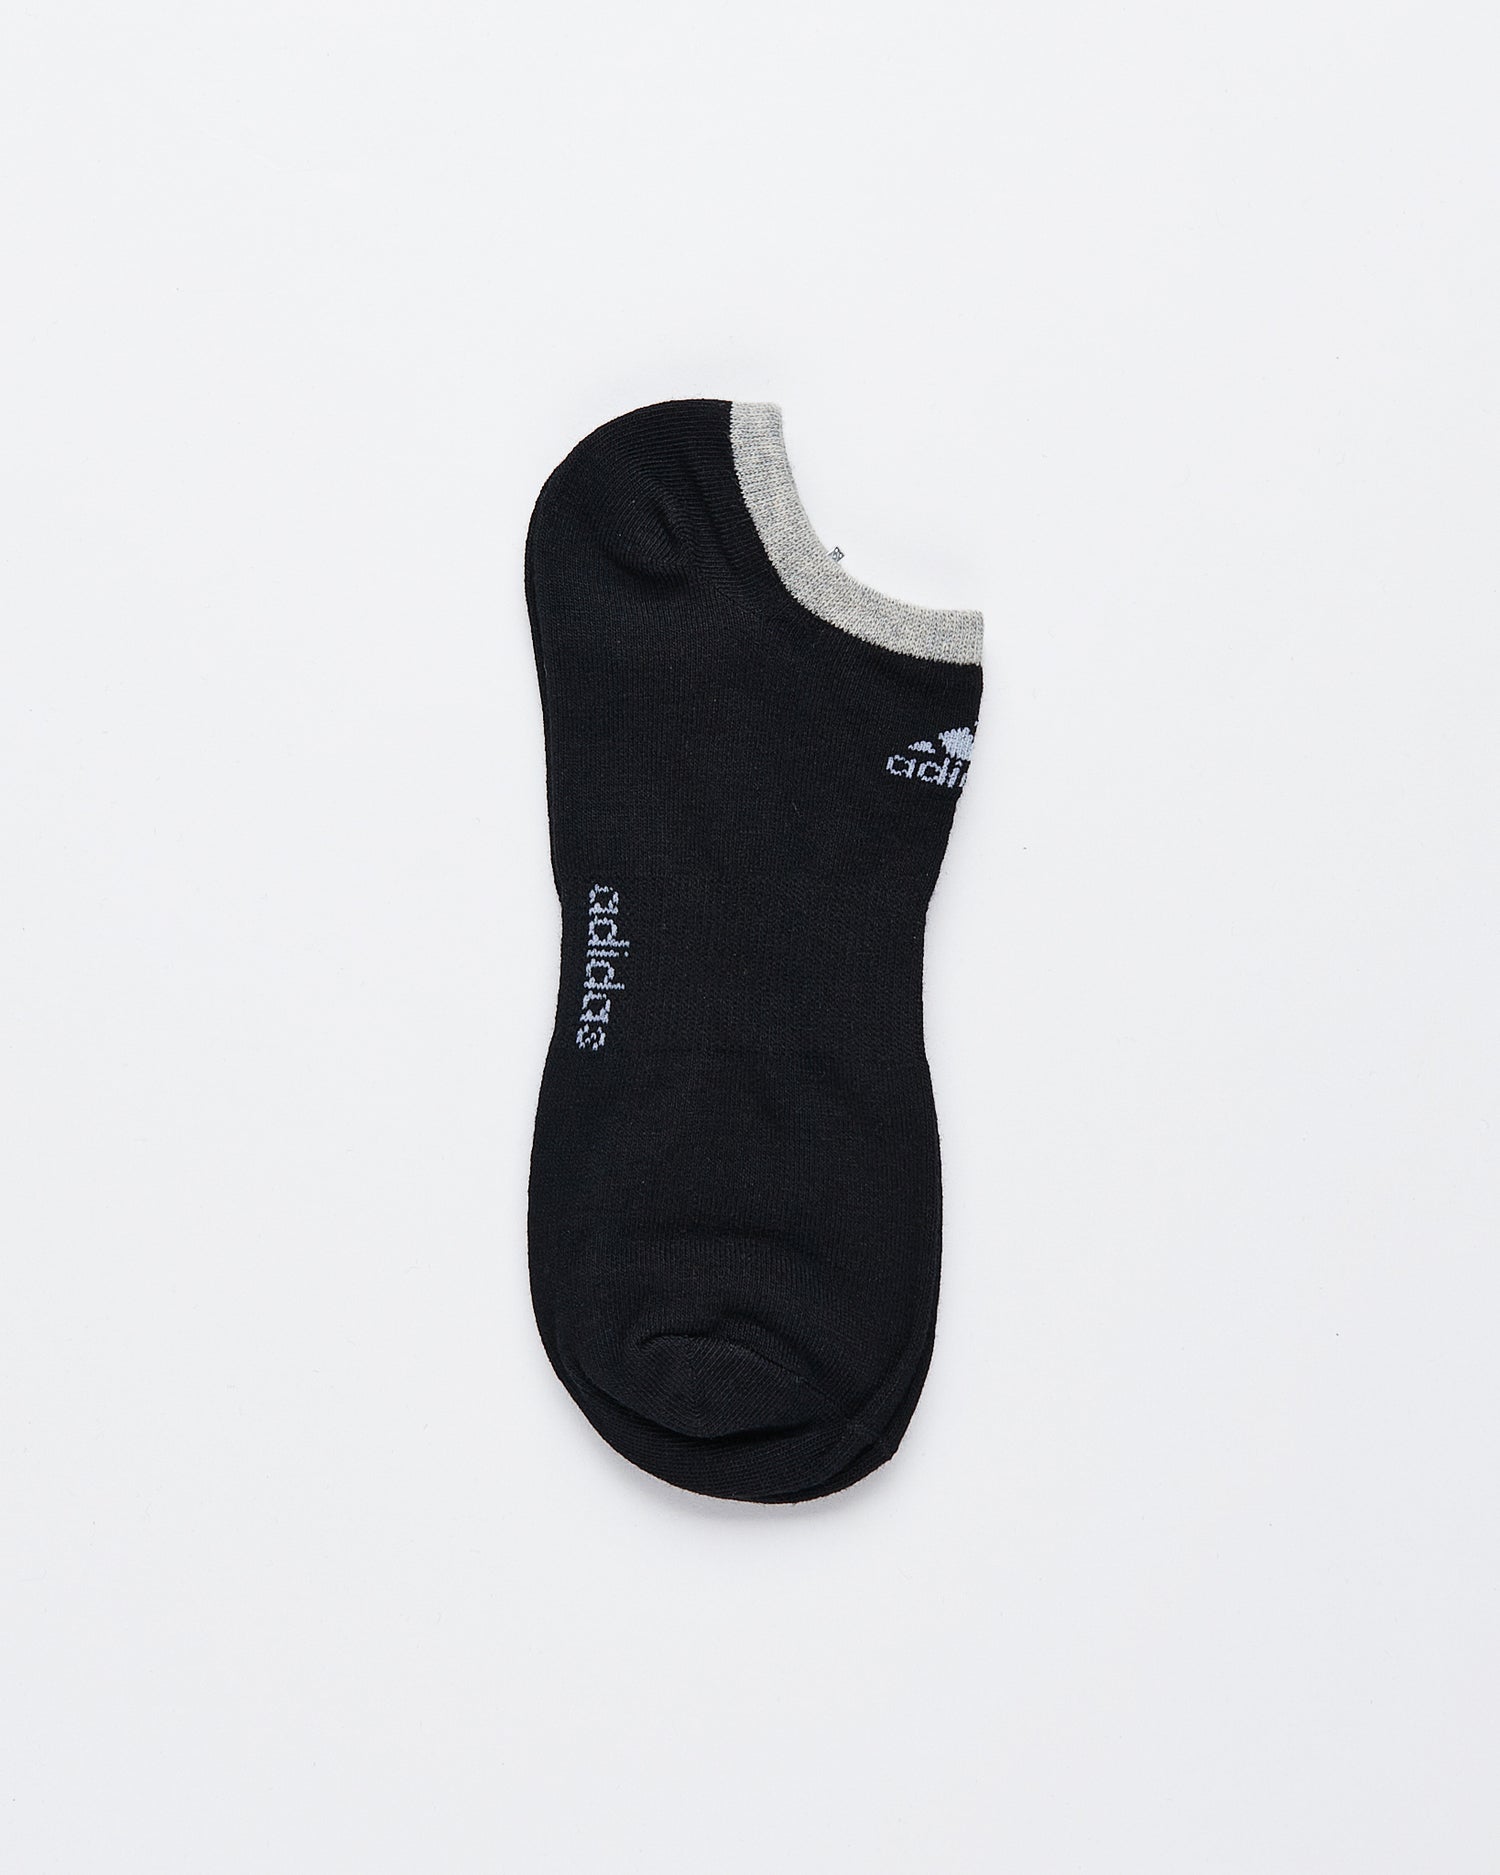 ADI Black Low Cut 1 Pairs Socks 1.90